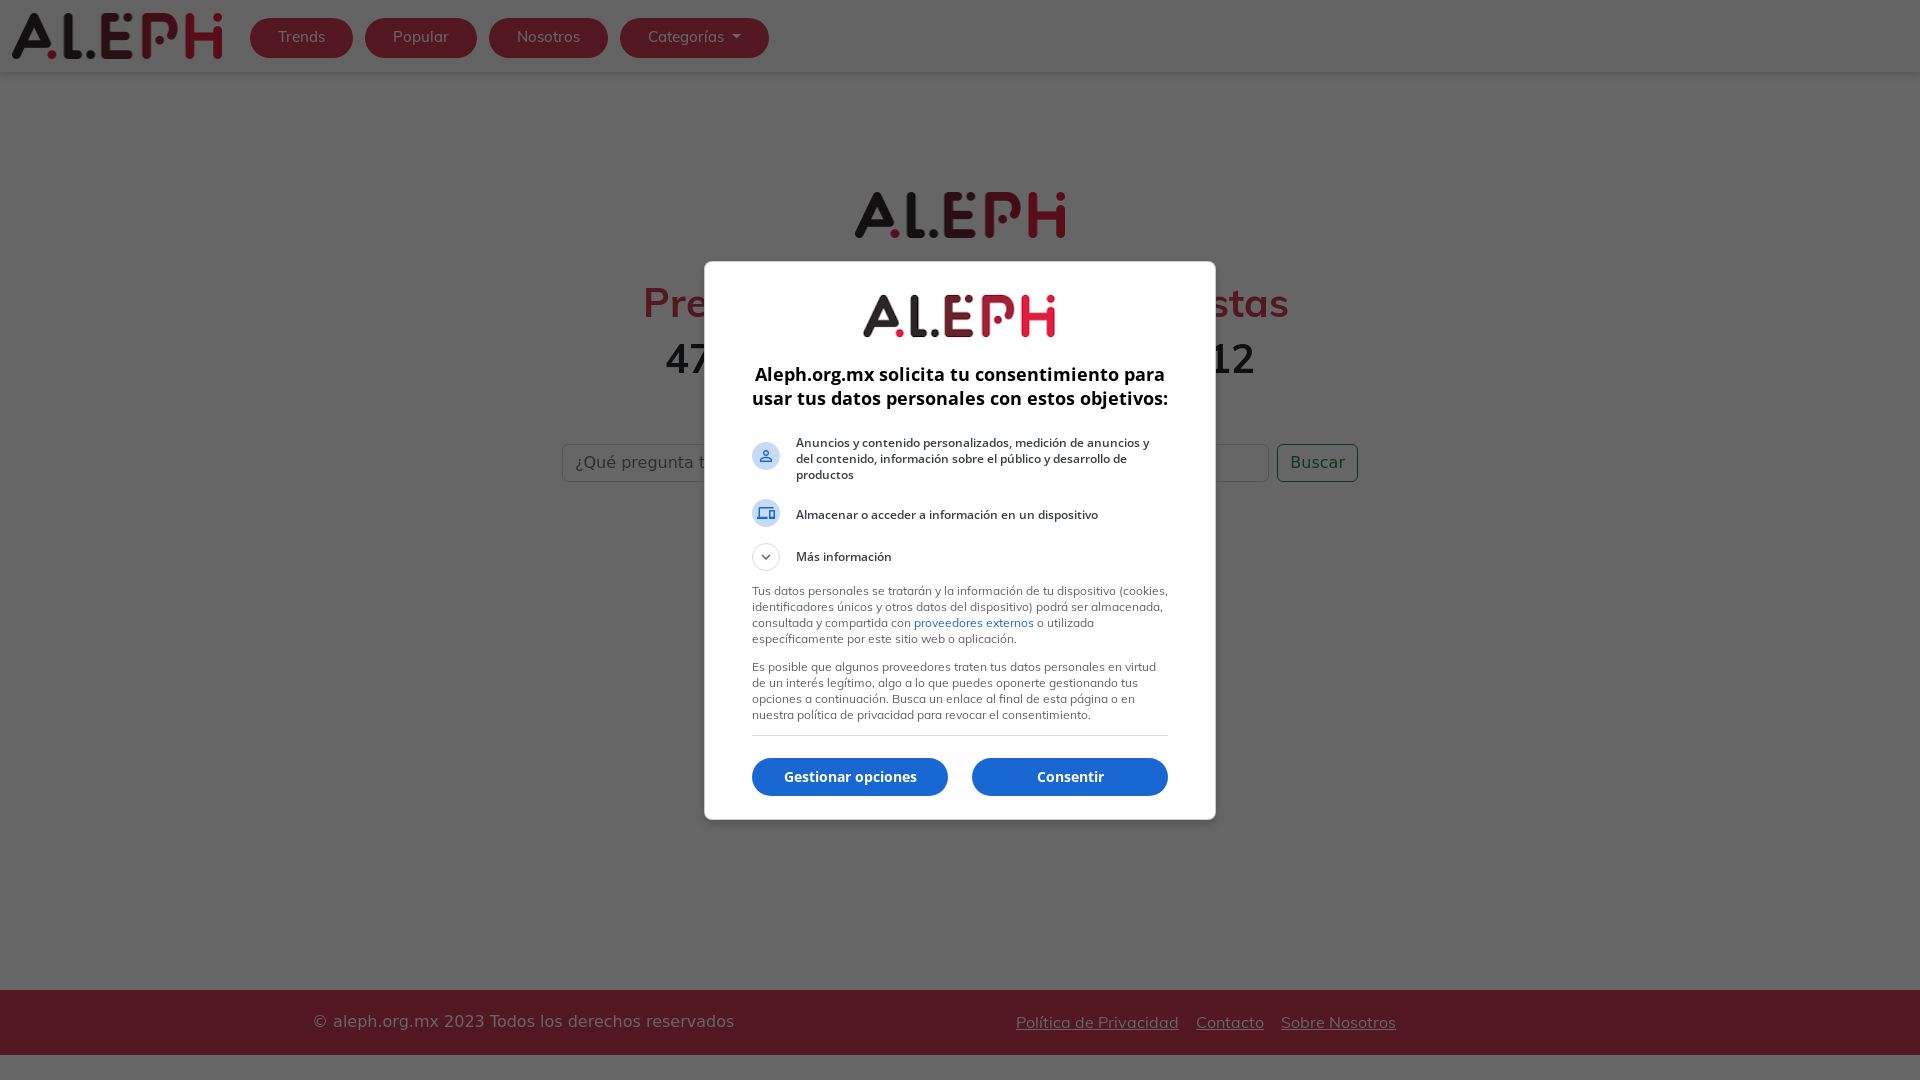 Website status aleph.org.mx is   ONLINE